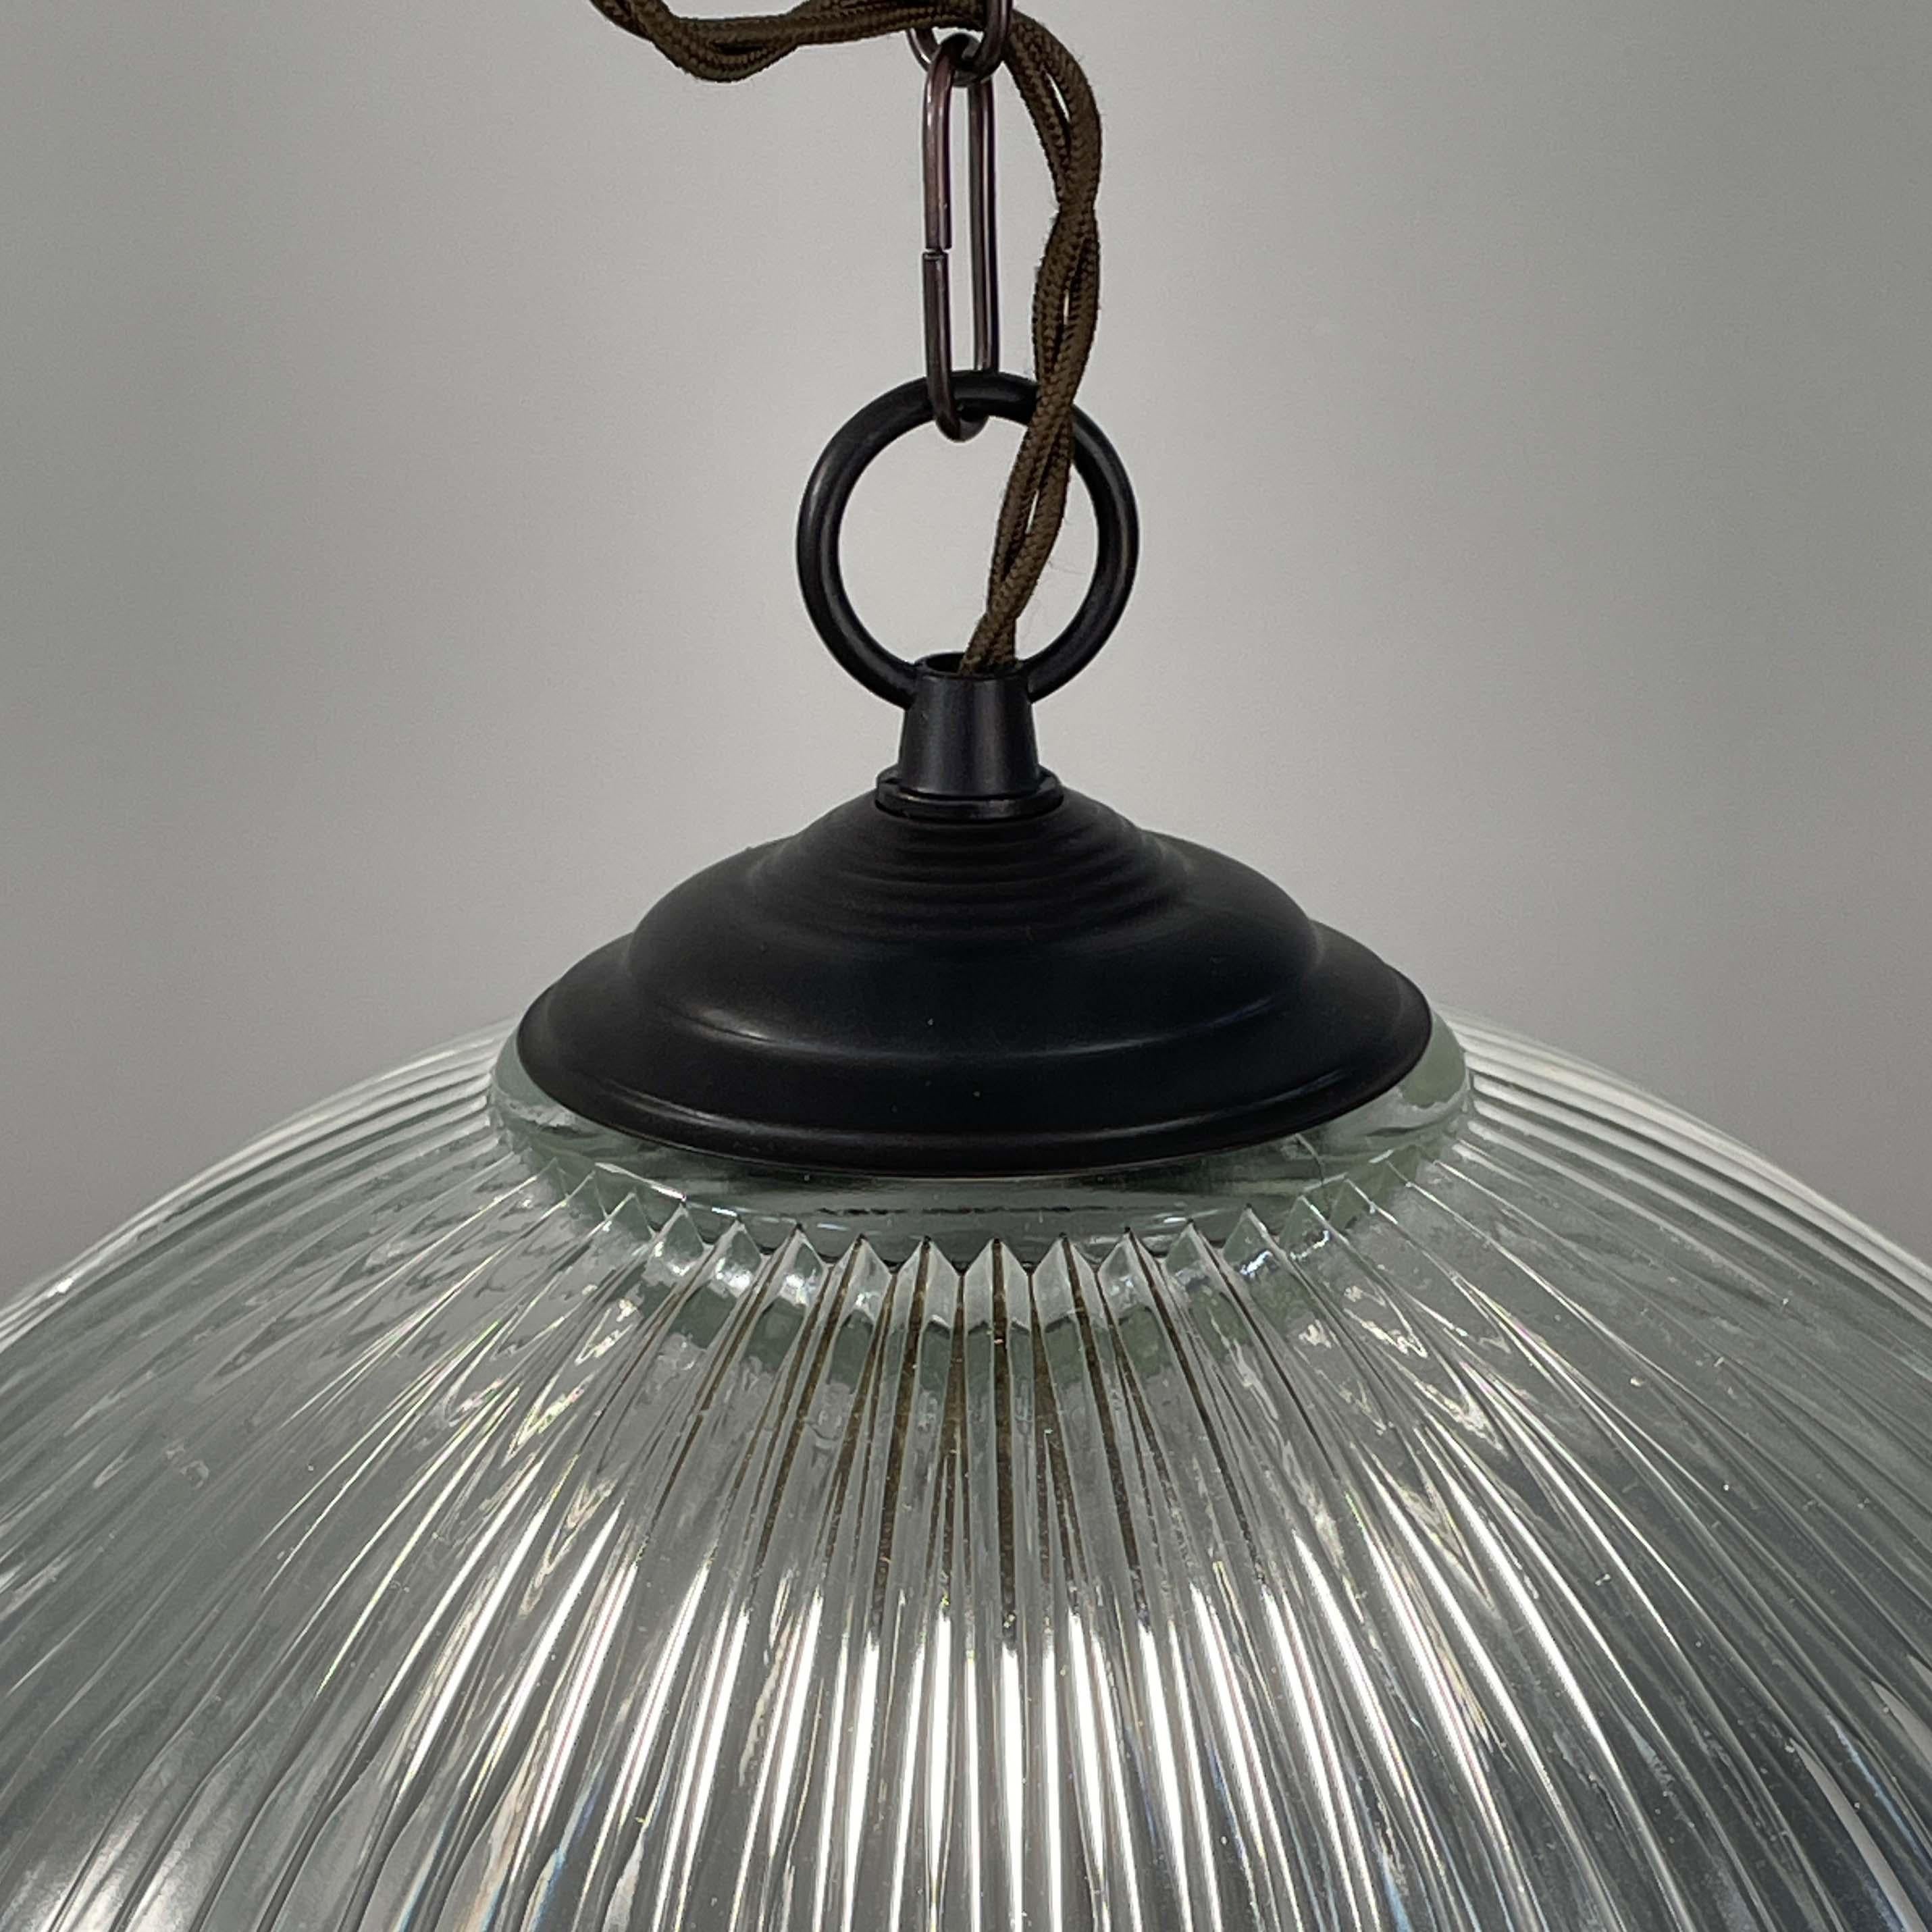 Art Deco Holophane Industrial Glass Pendant Lamp, France, 1930s For Sale 2